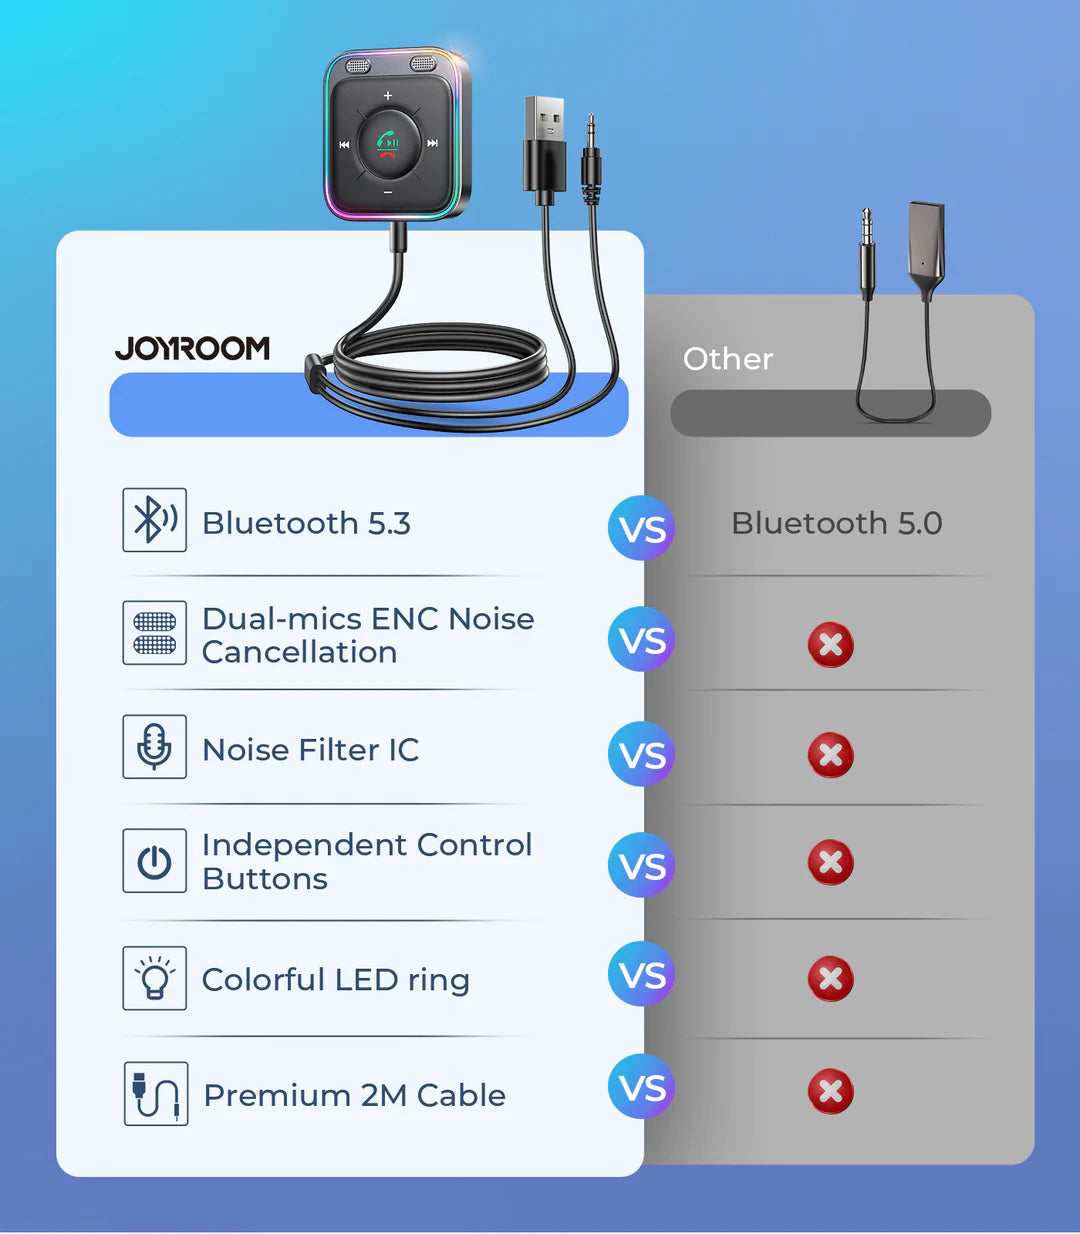 Joyroom 2-in-1 Wireless Transmitter/Receiver - Black